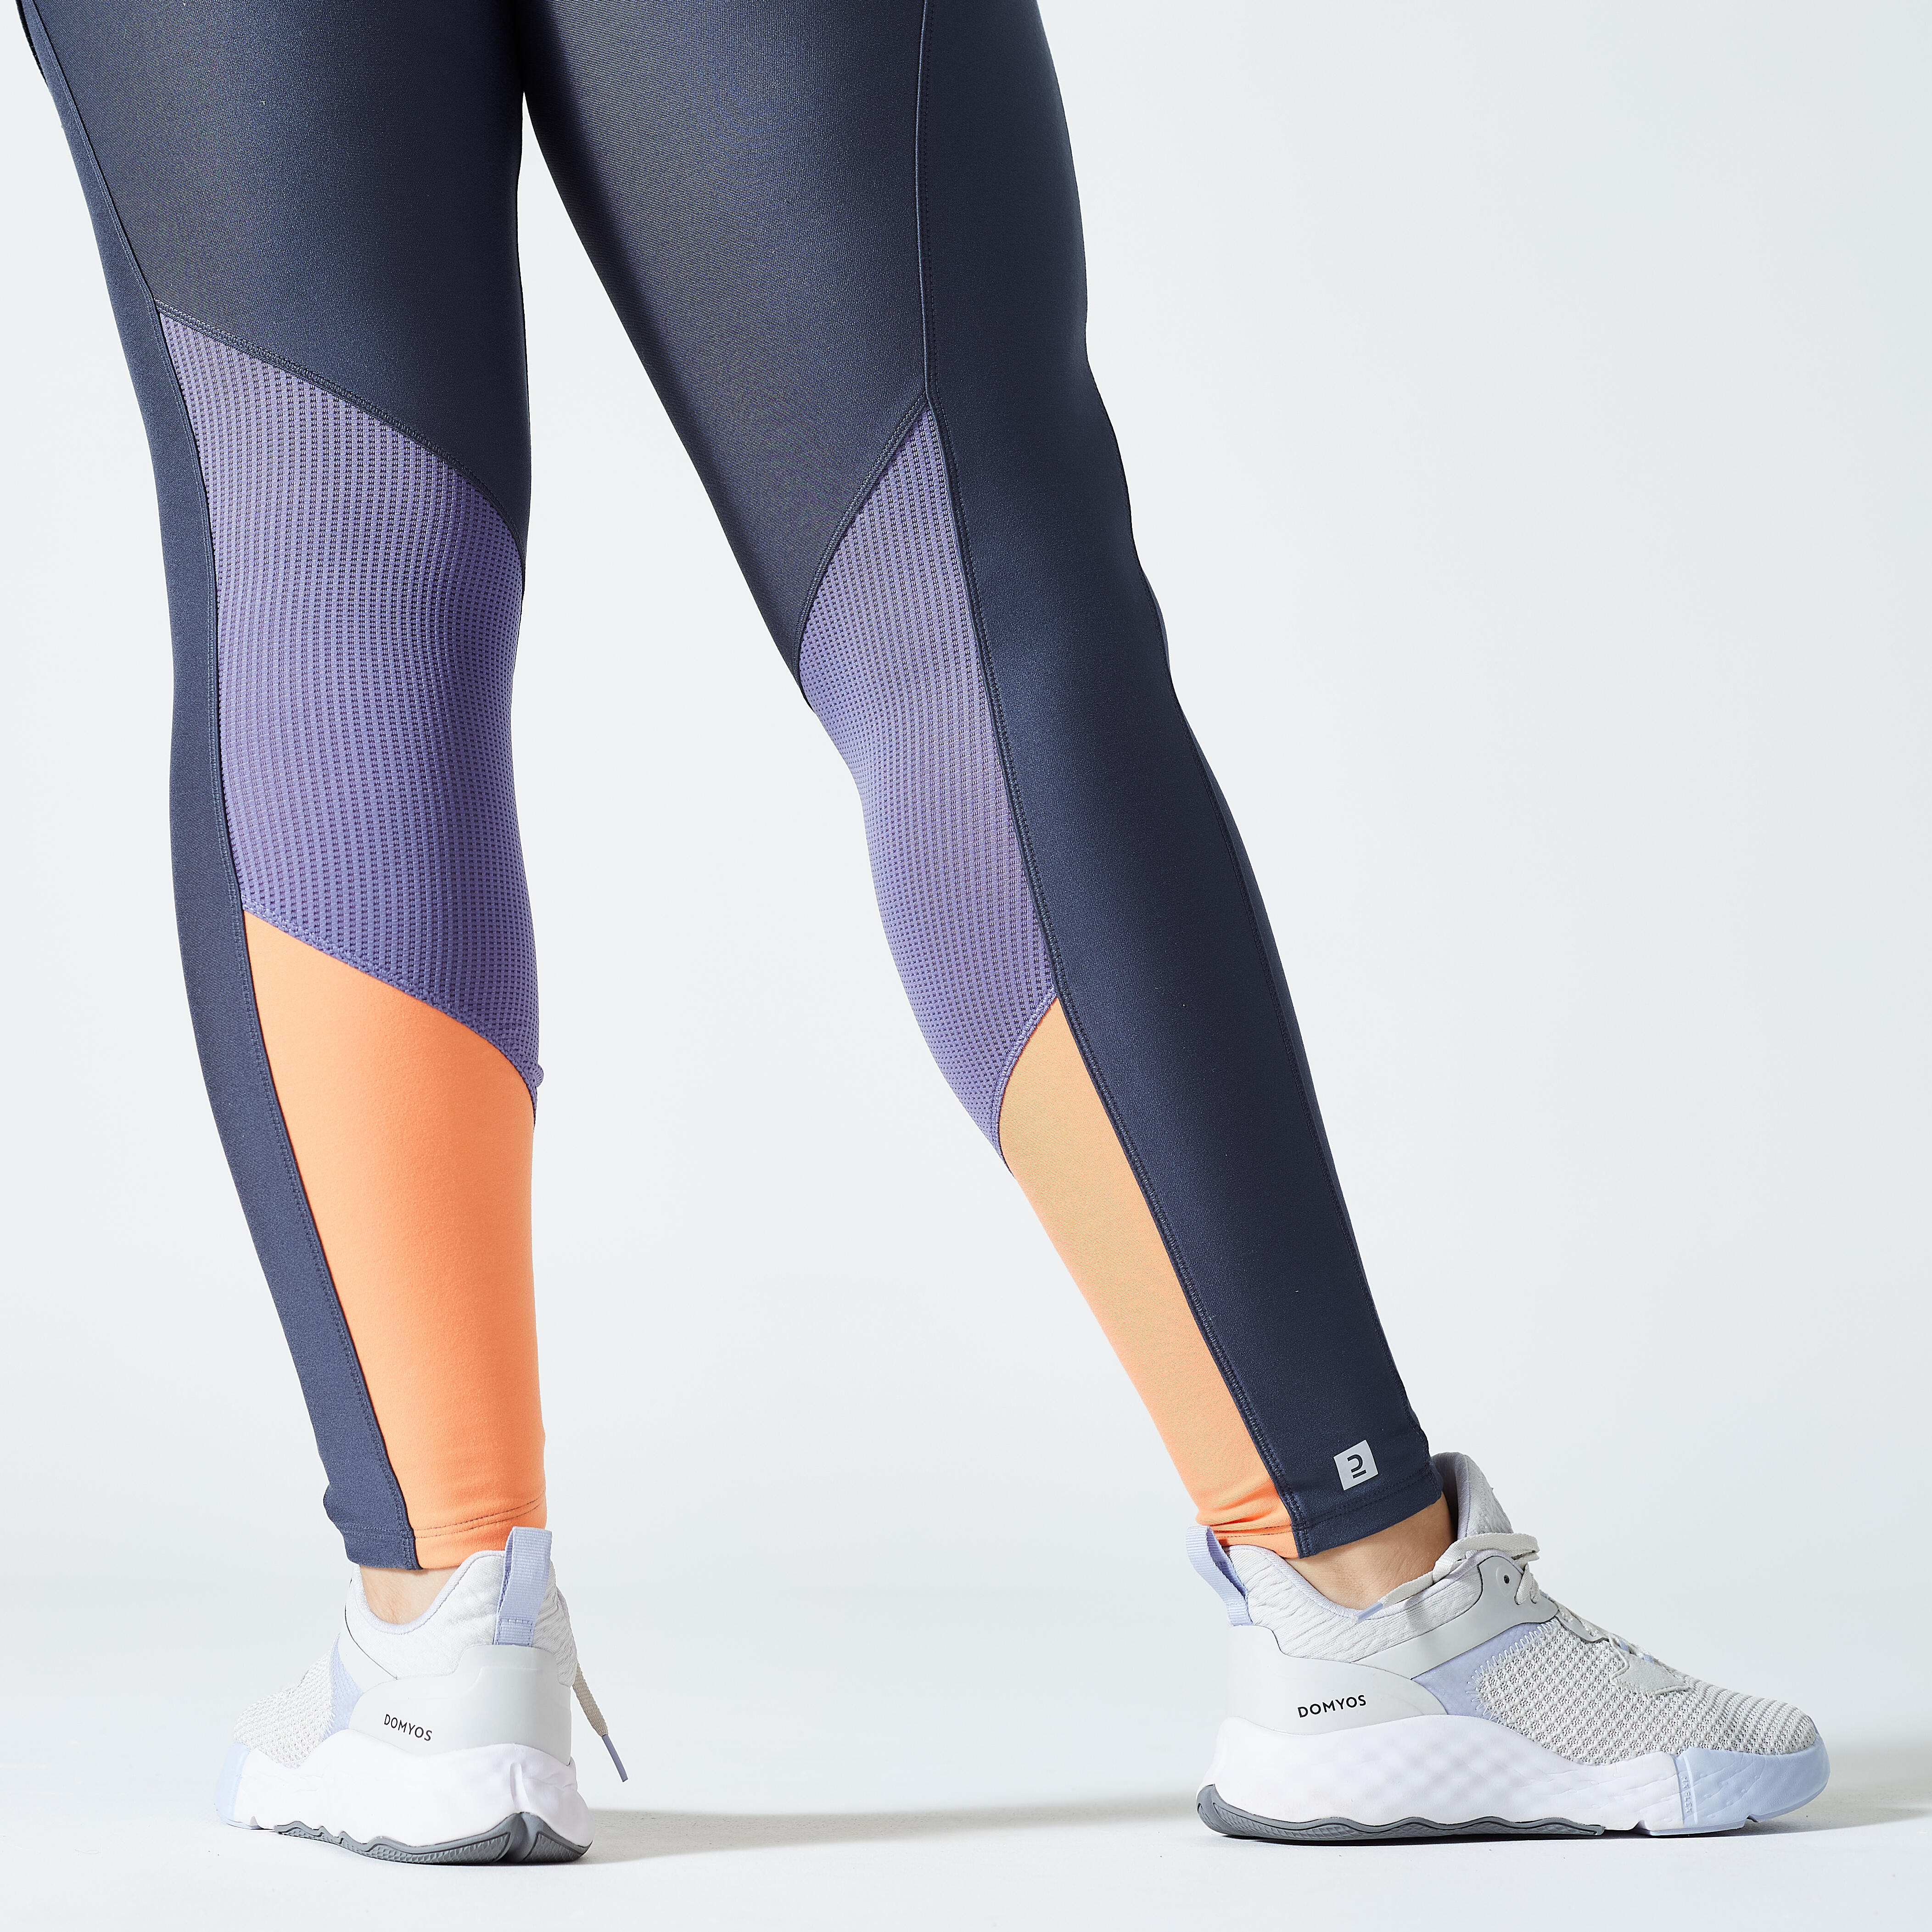 Women's Cardio Fitness Leggings with Phone Pocket - Grey/Orange